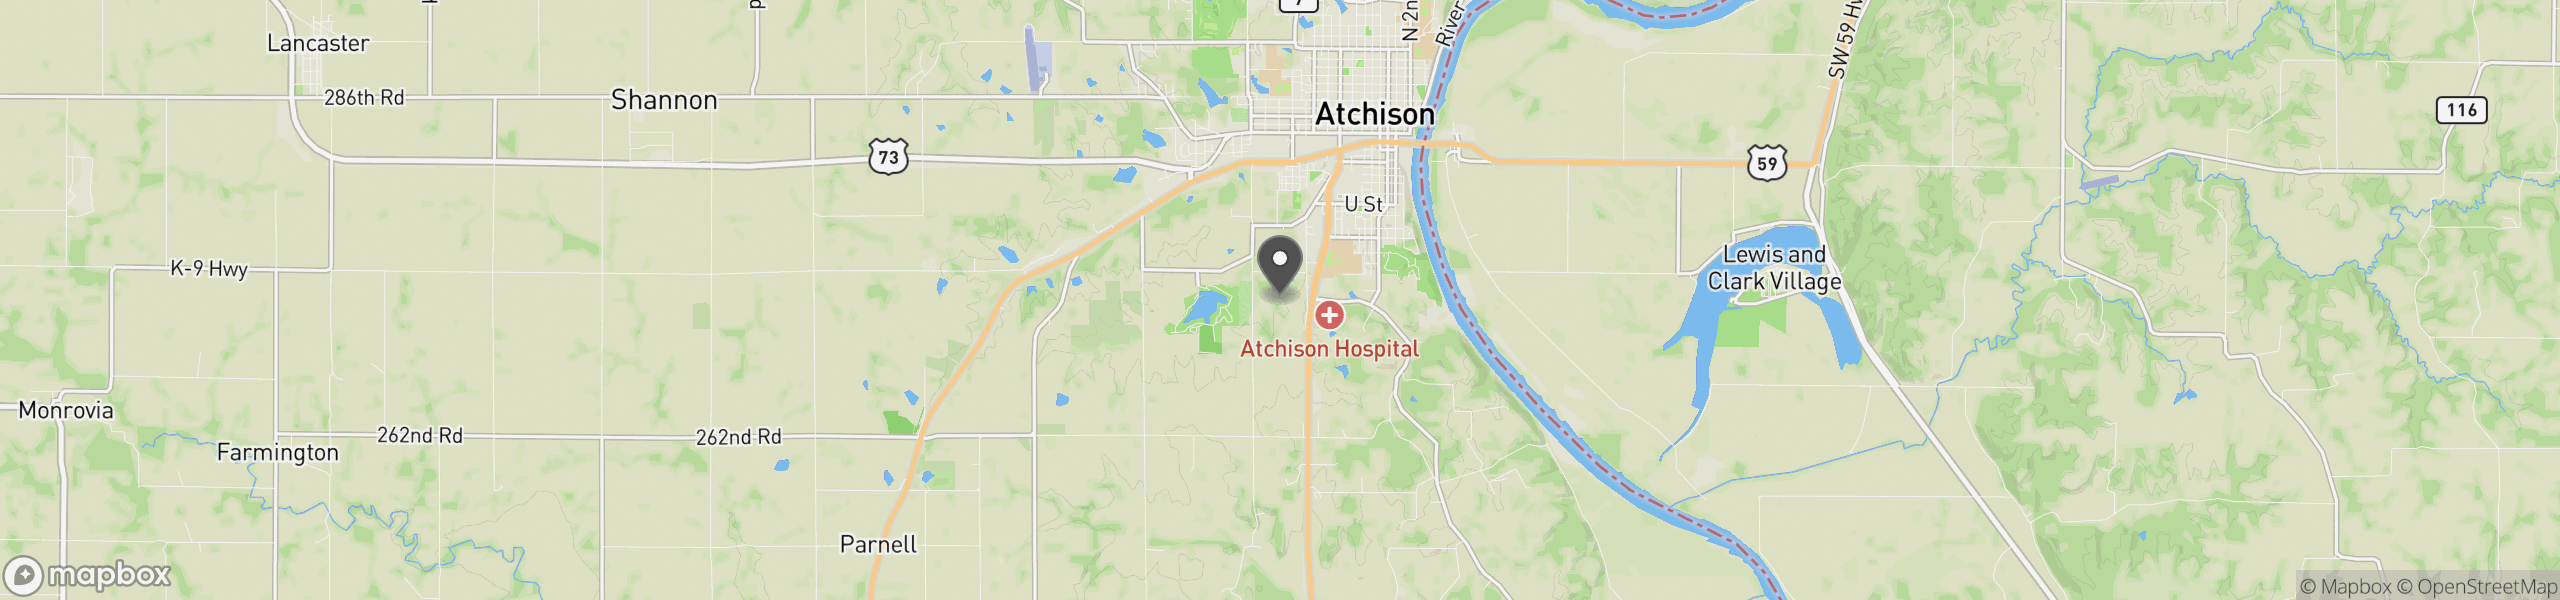 Atchison, KS 66002